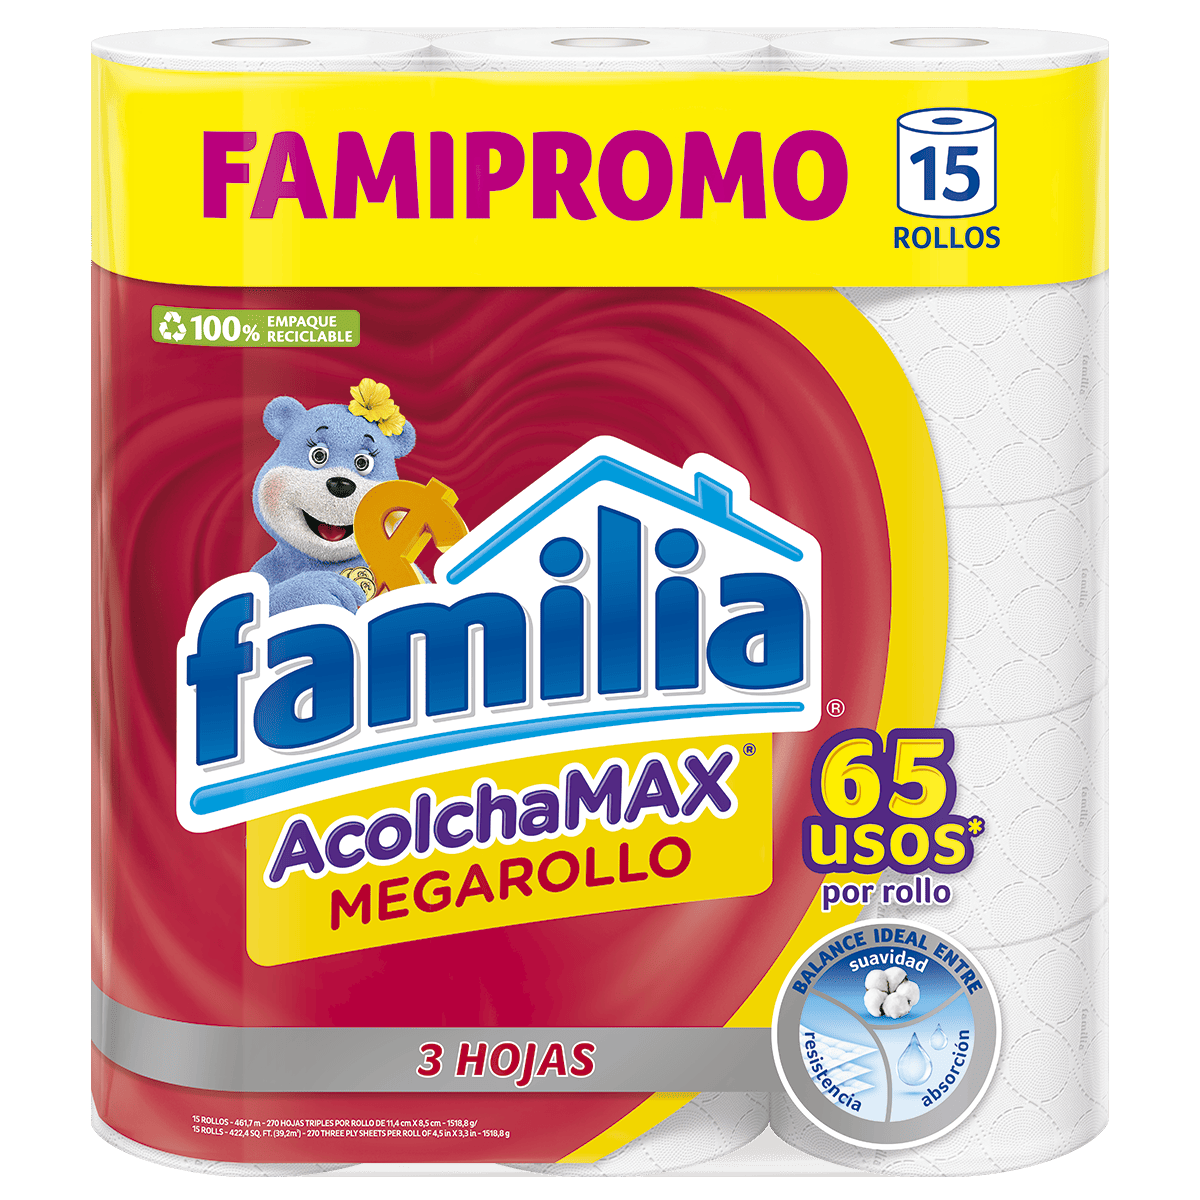 Imagen Papel Higiénico Familia AcolchaMAX MegaRollo X 15 Rollos 1